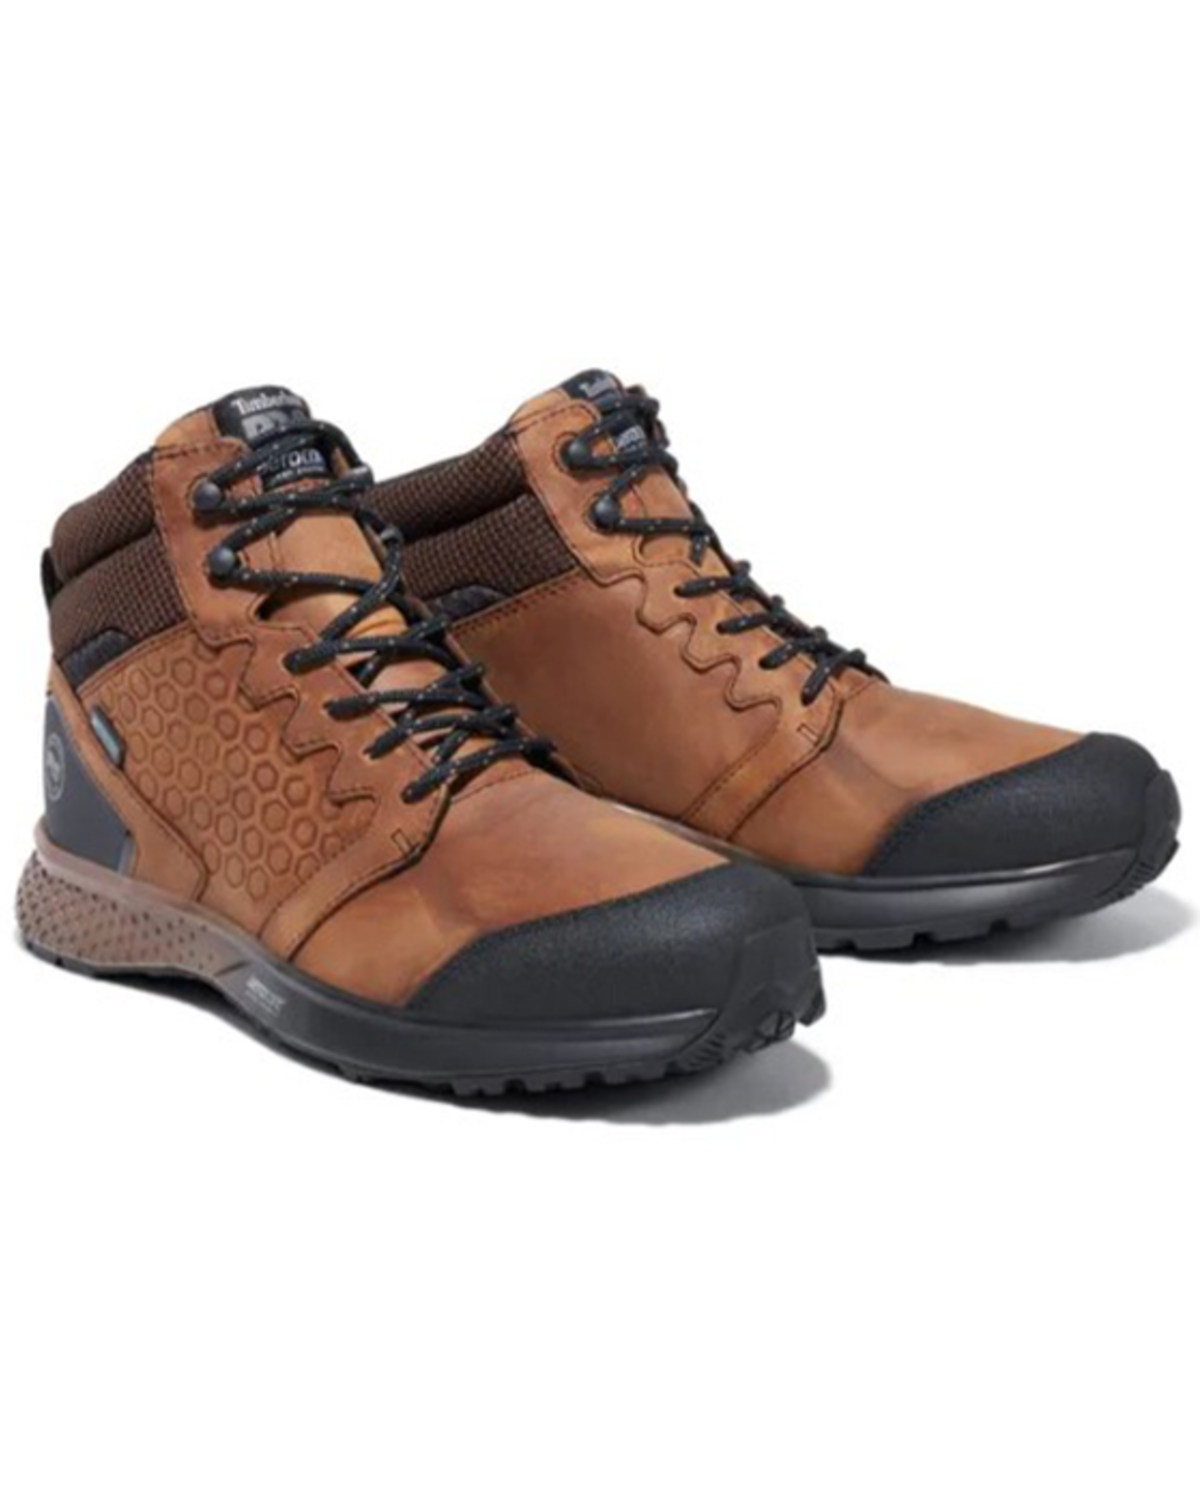 Timberland Men's Reaxion Waterproof Work Boots - Soft Toe